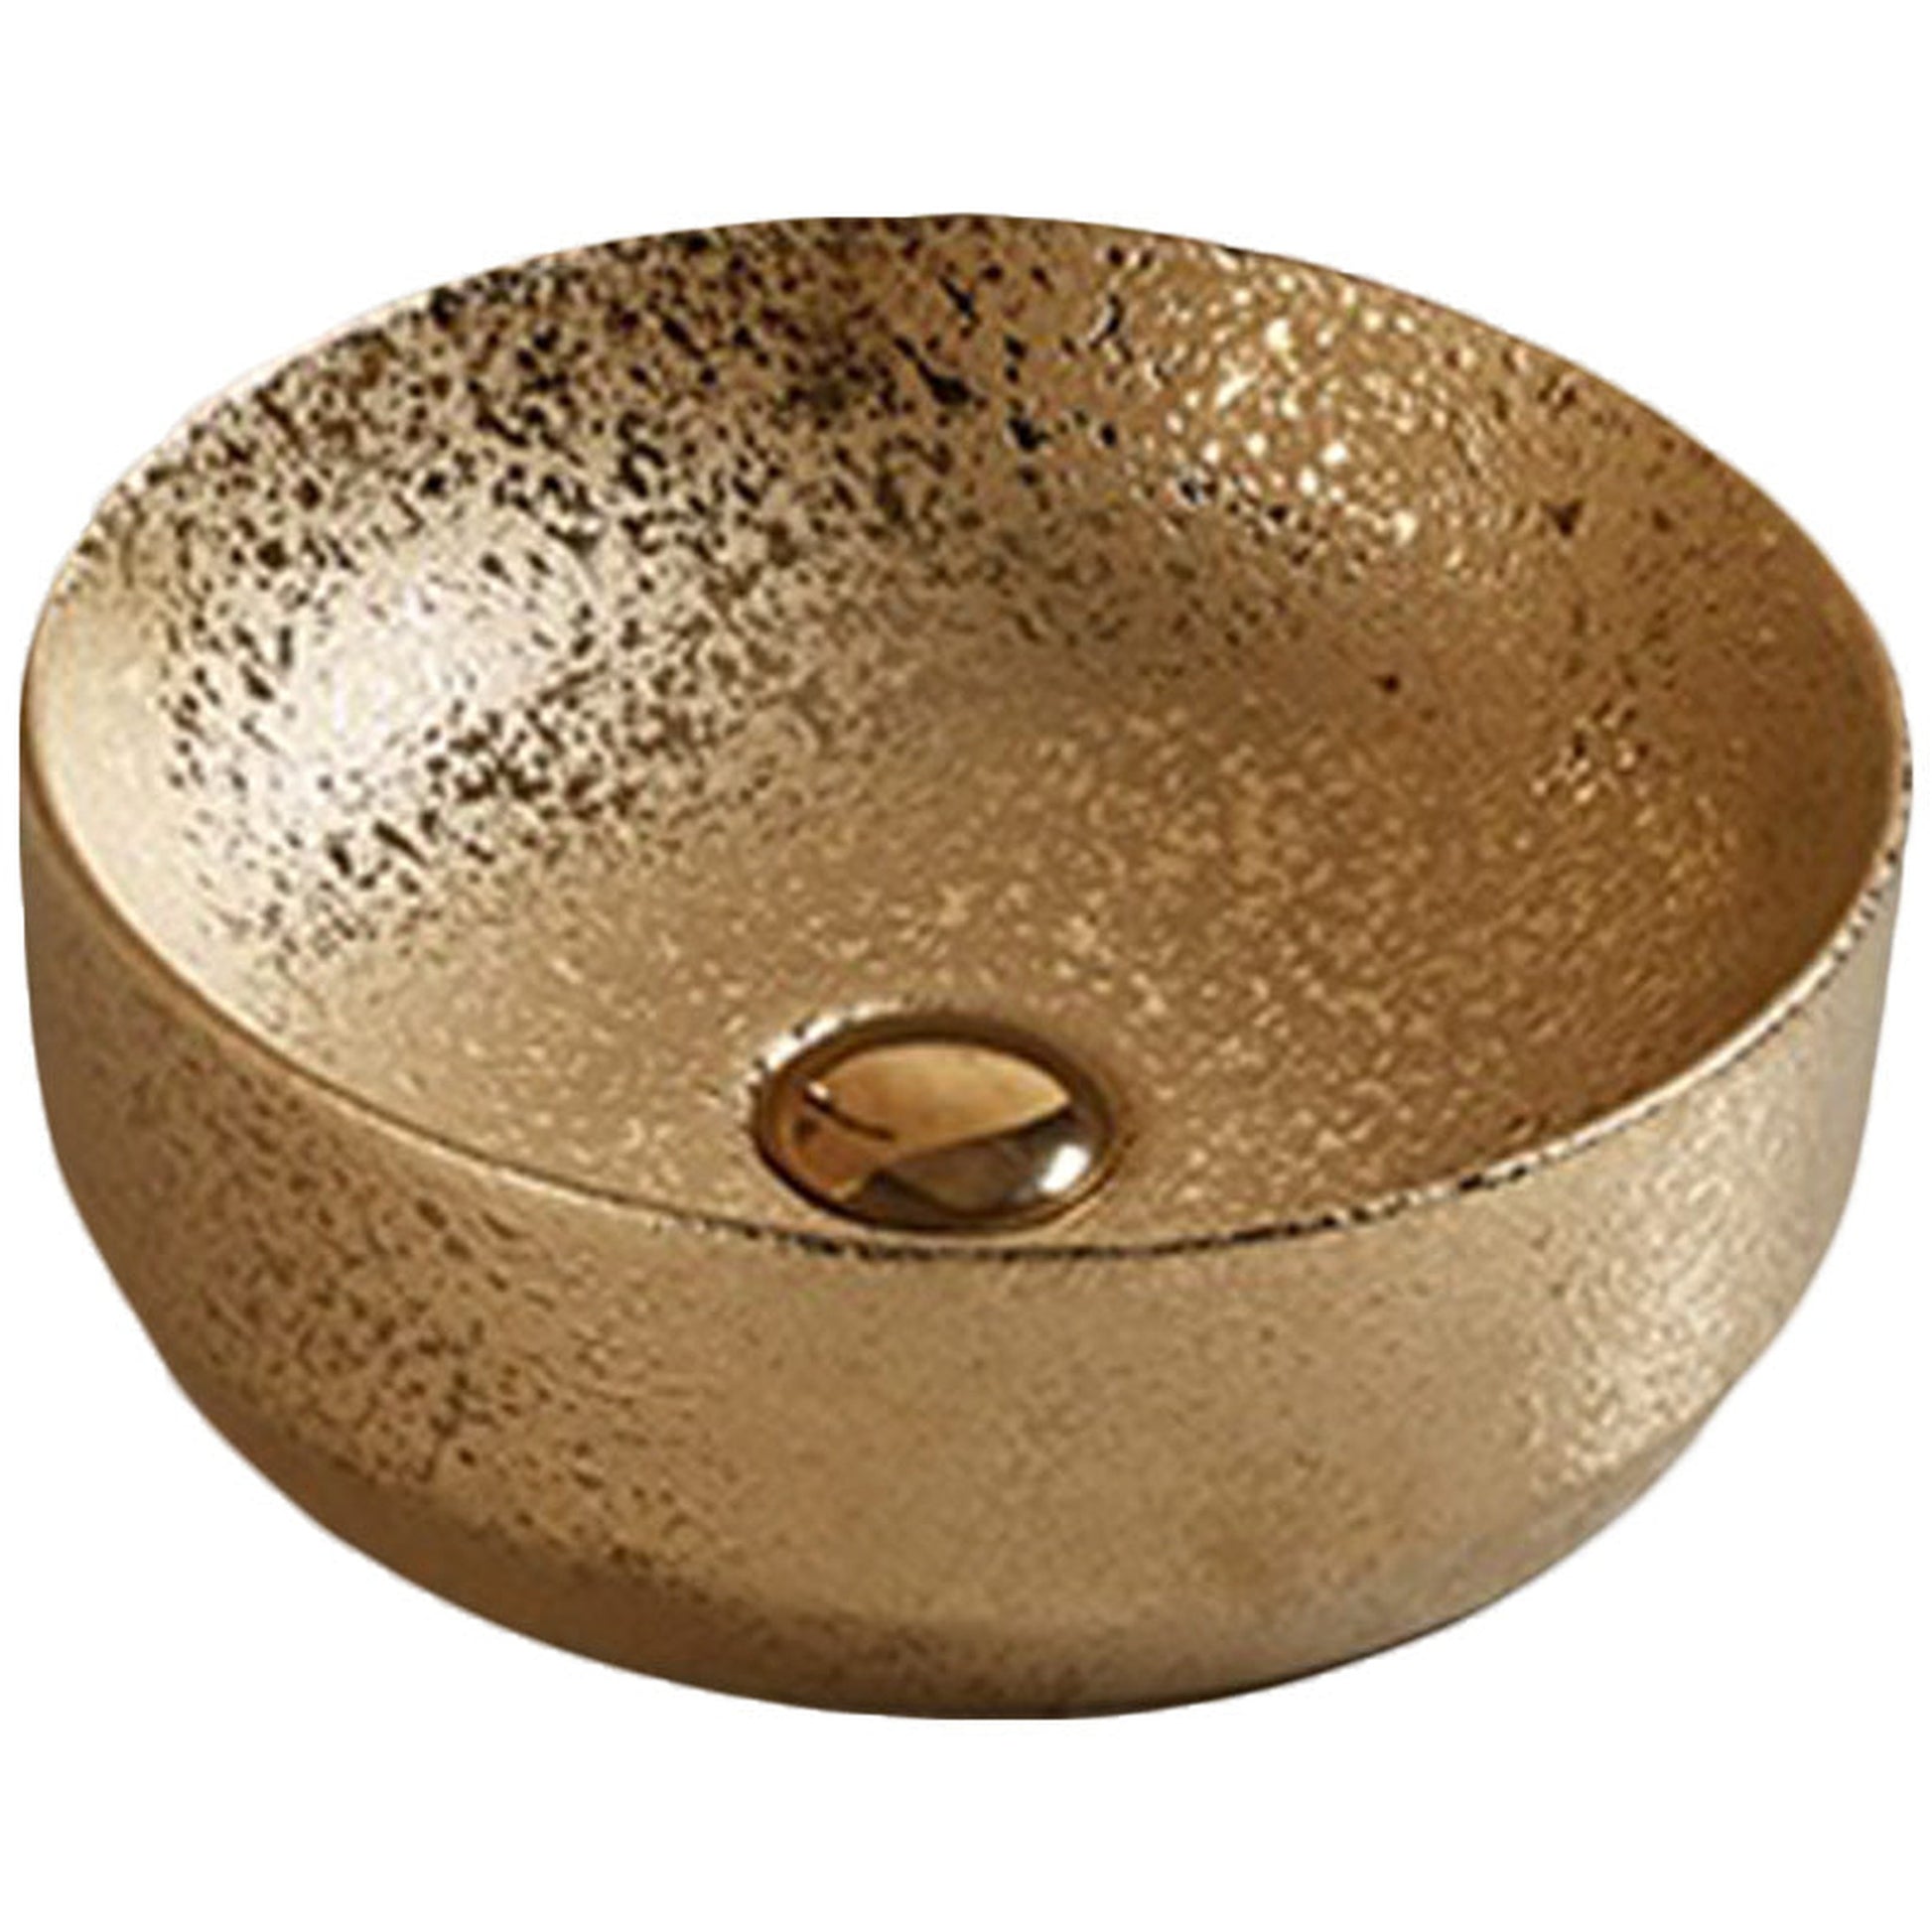 American Imaginations AI-27926 Round Gold Ceramic Bathroom Vessel Sink with Enamel Glaze Finish